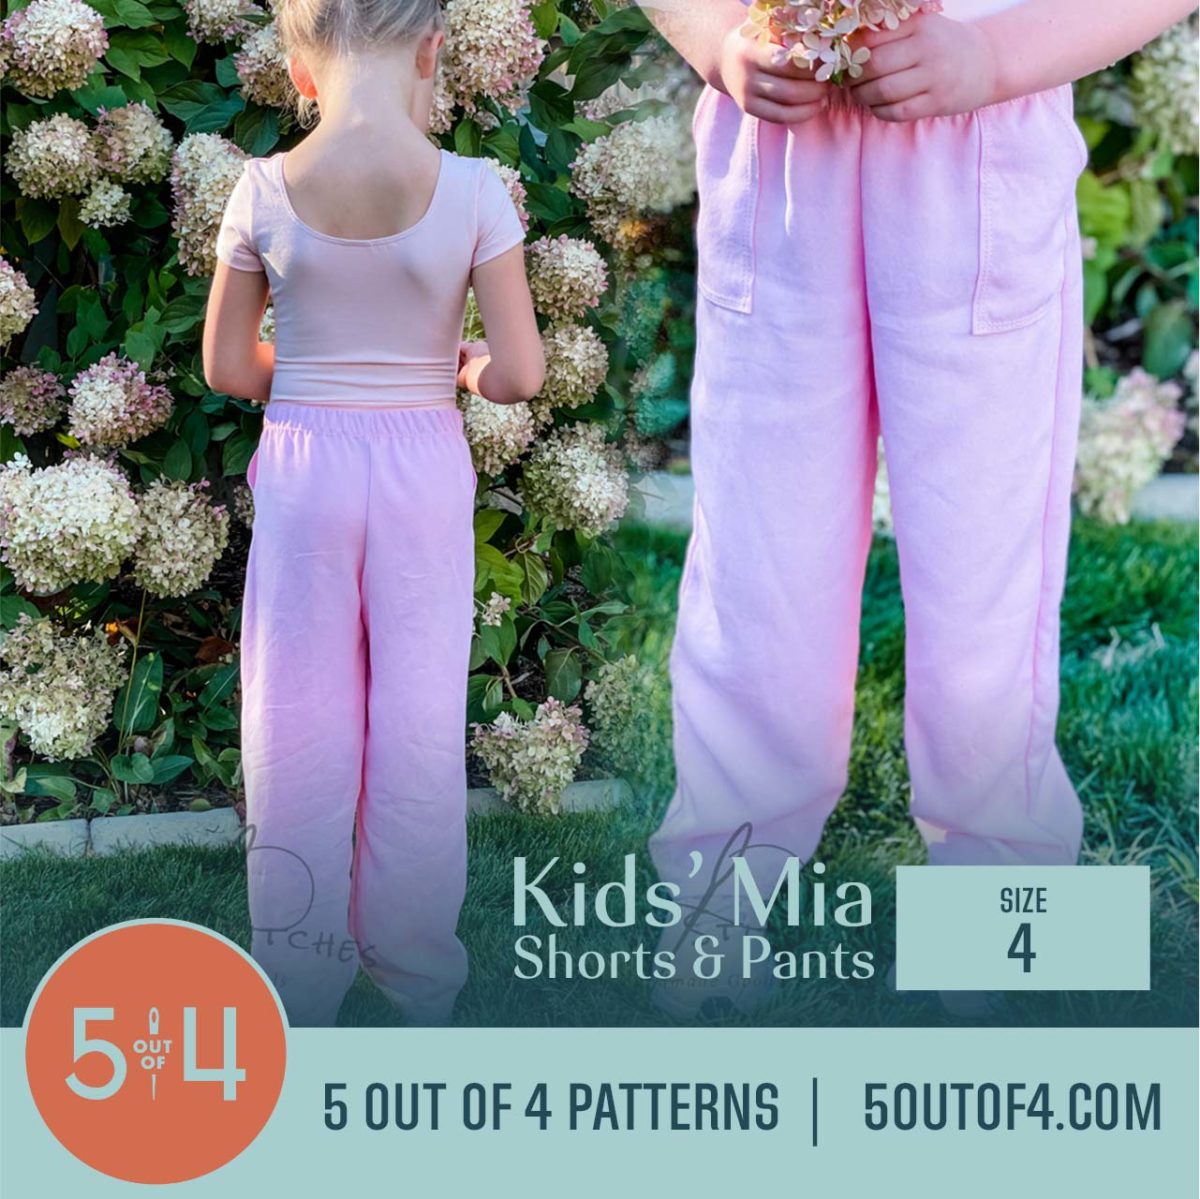 5oo4 Patterns Kids' Mia Pants Size 4